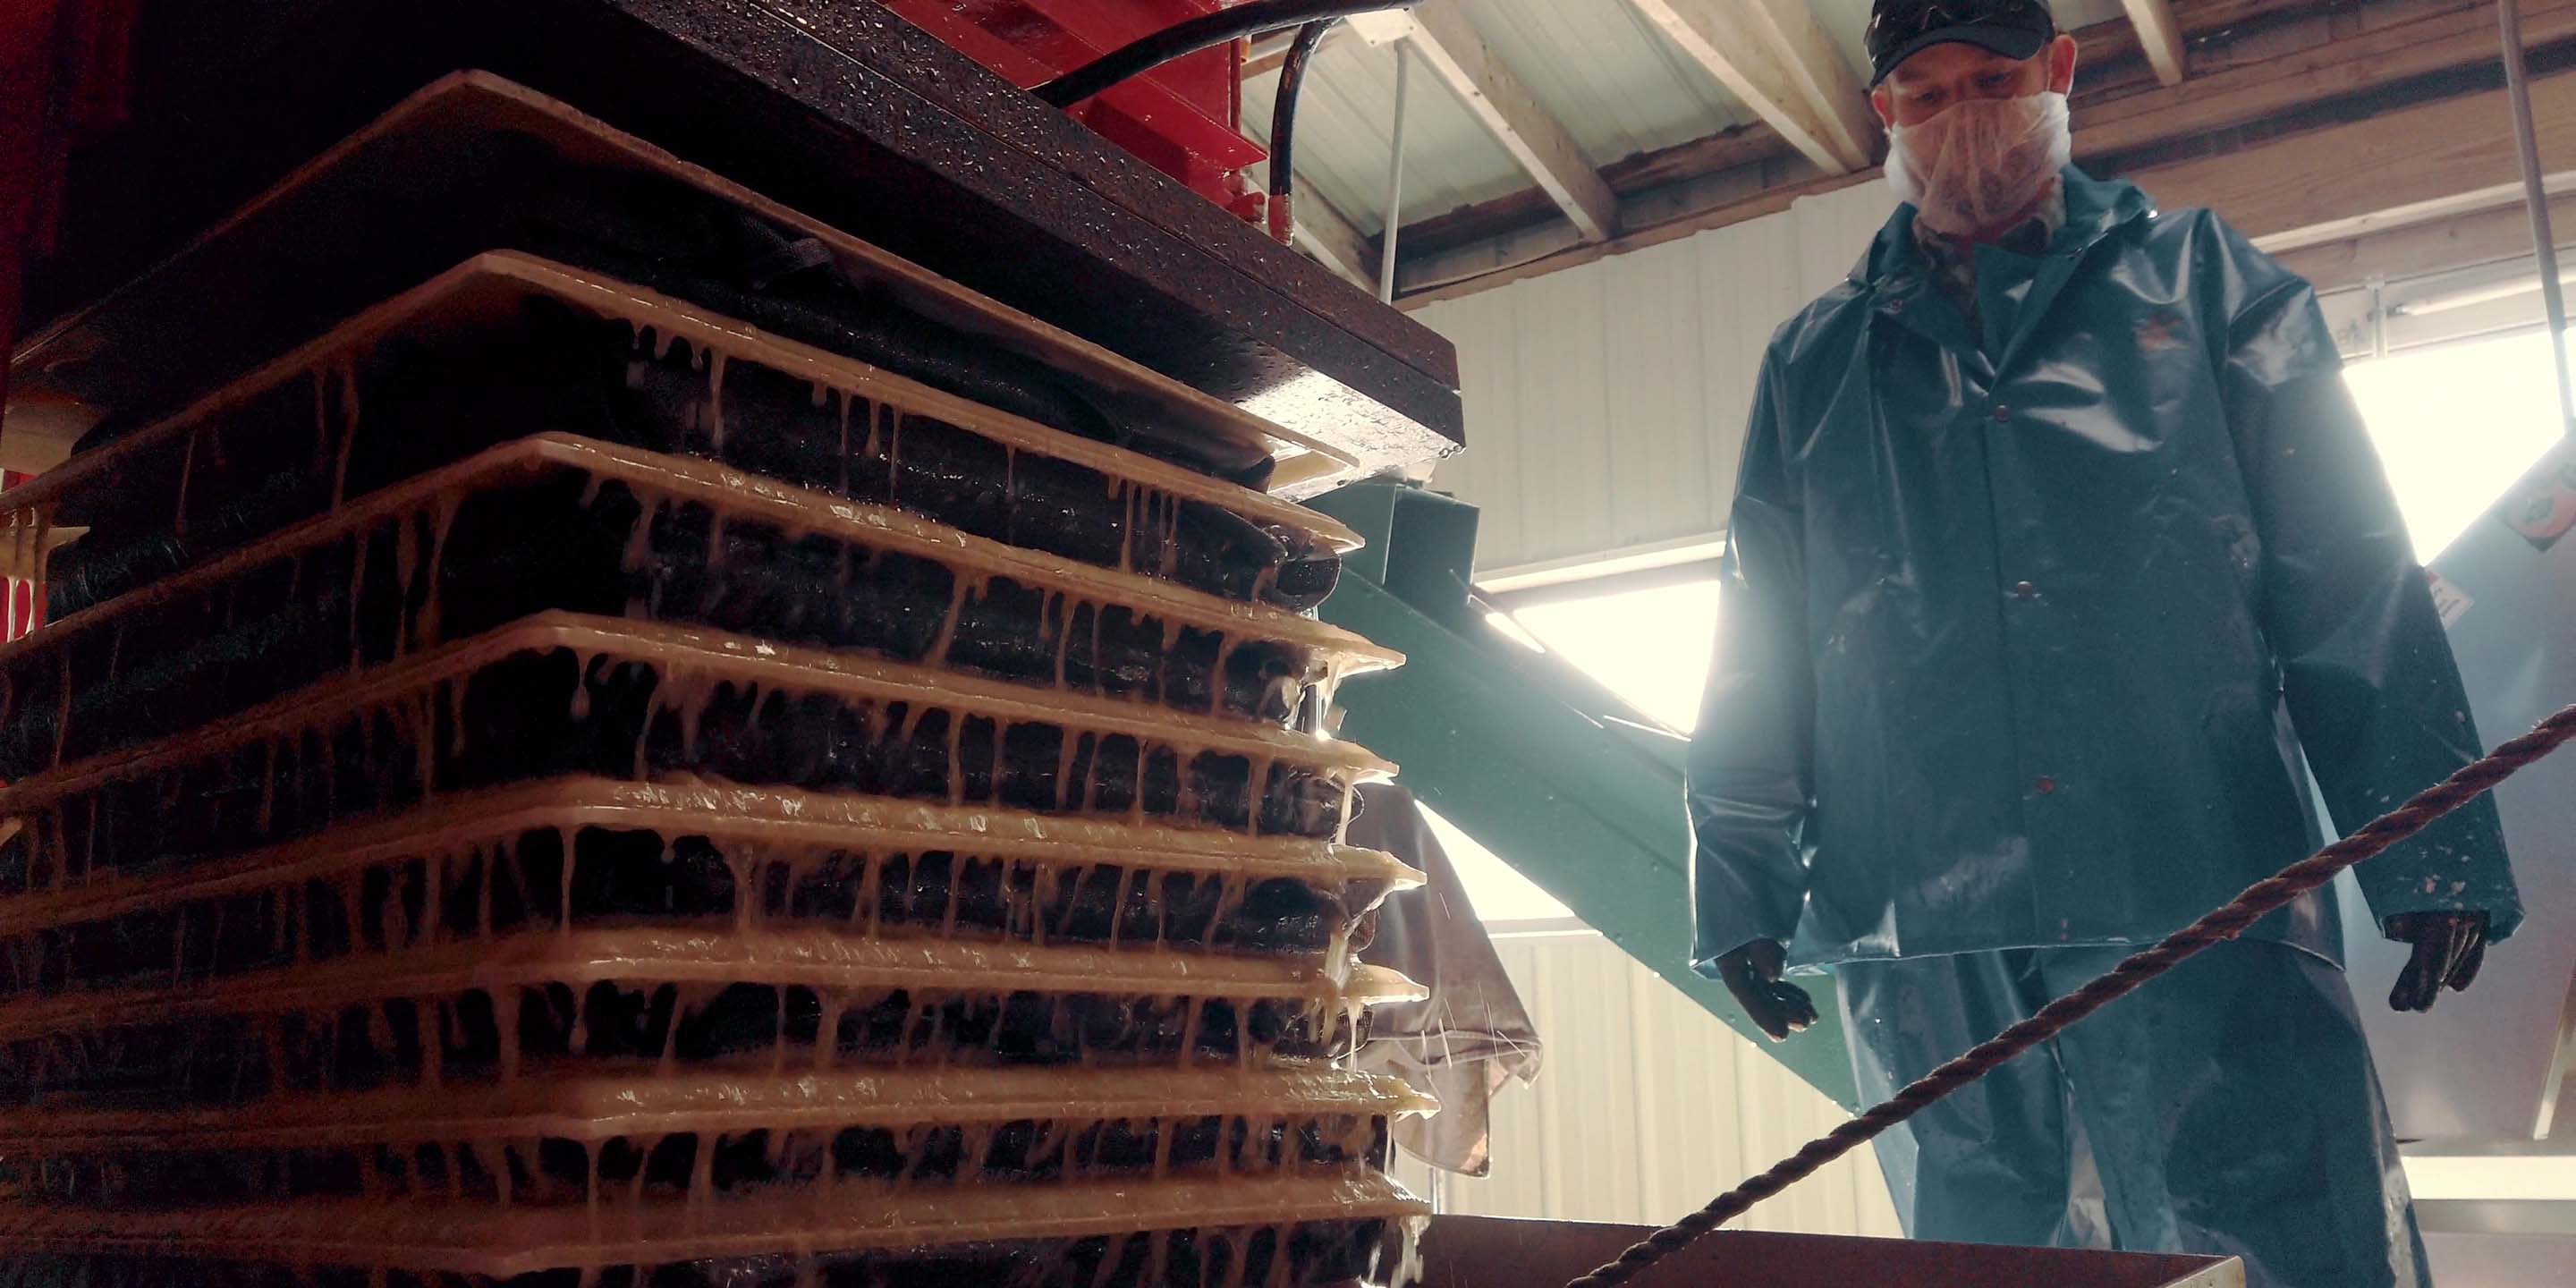 Apple cider going through a wood-rack press